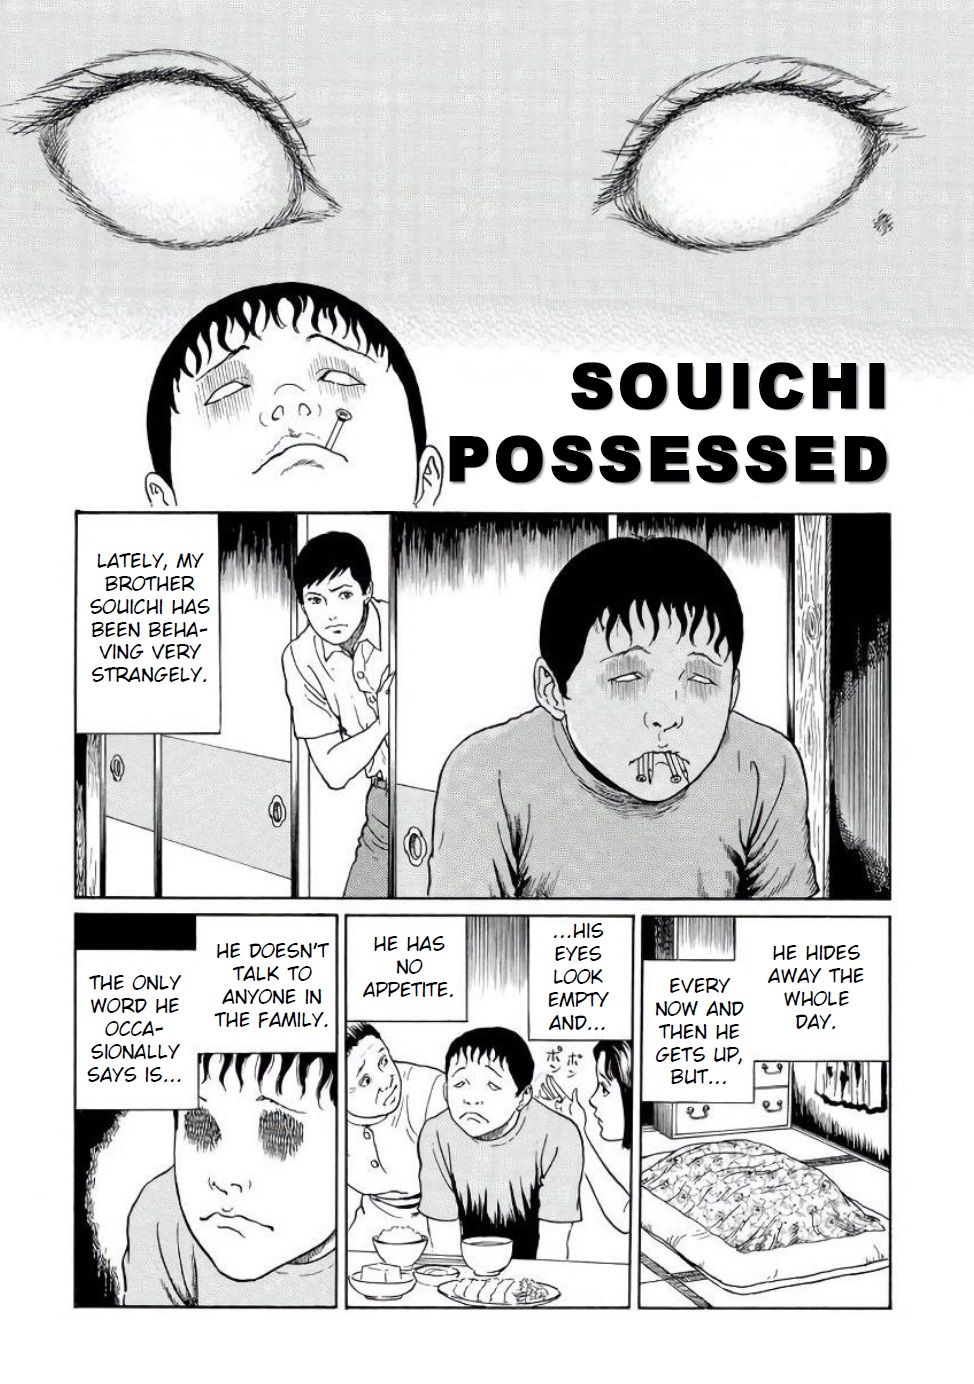 Souichi Possessed cover 0